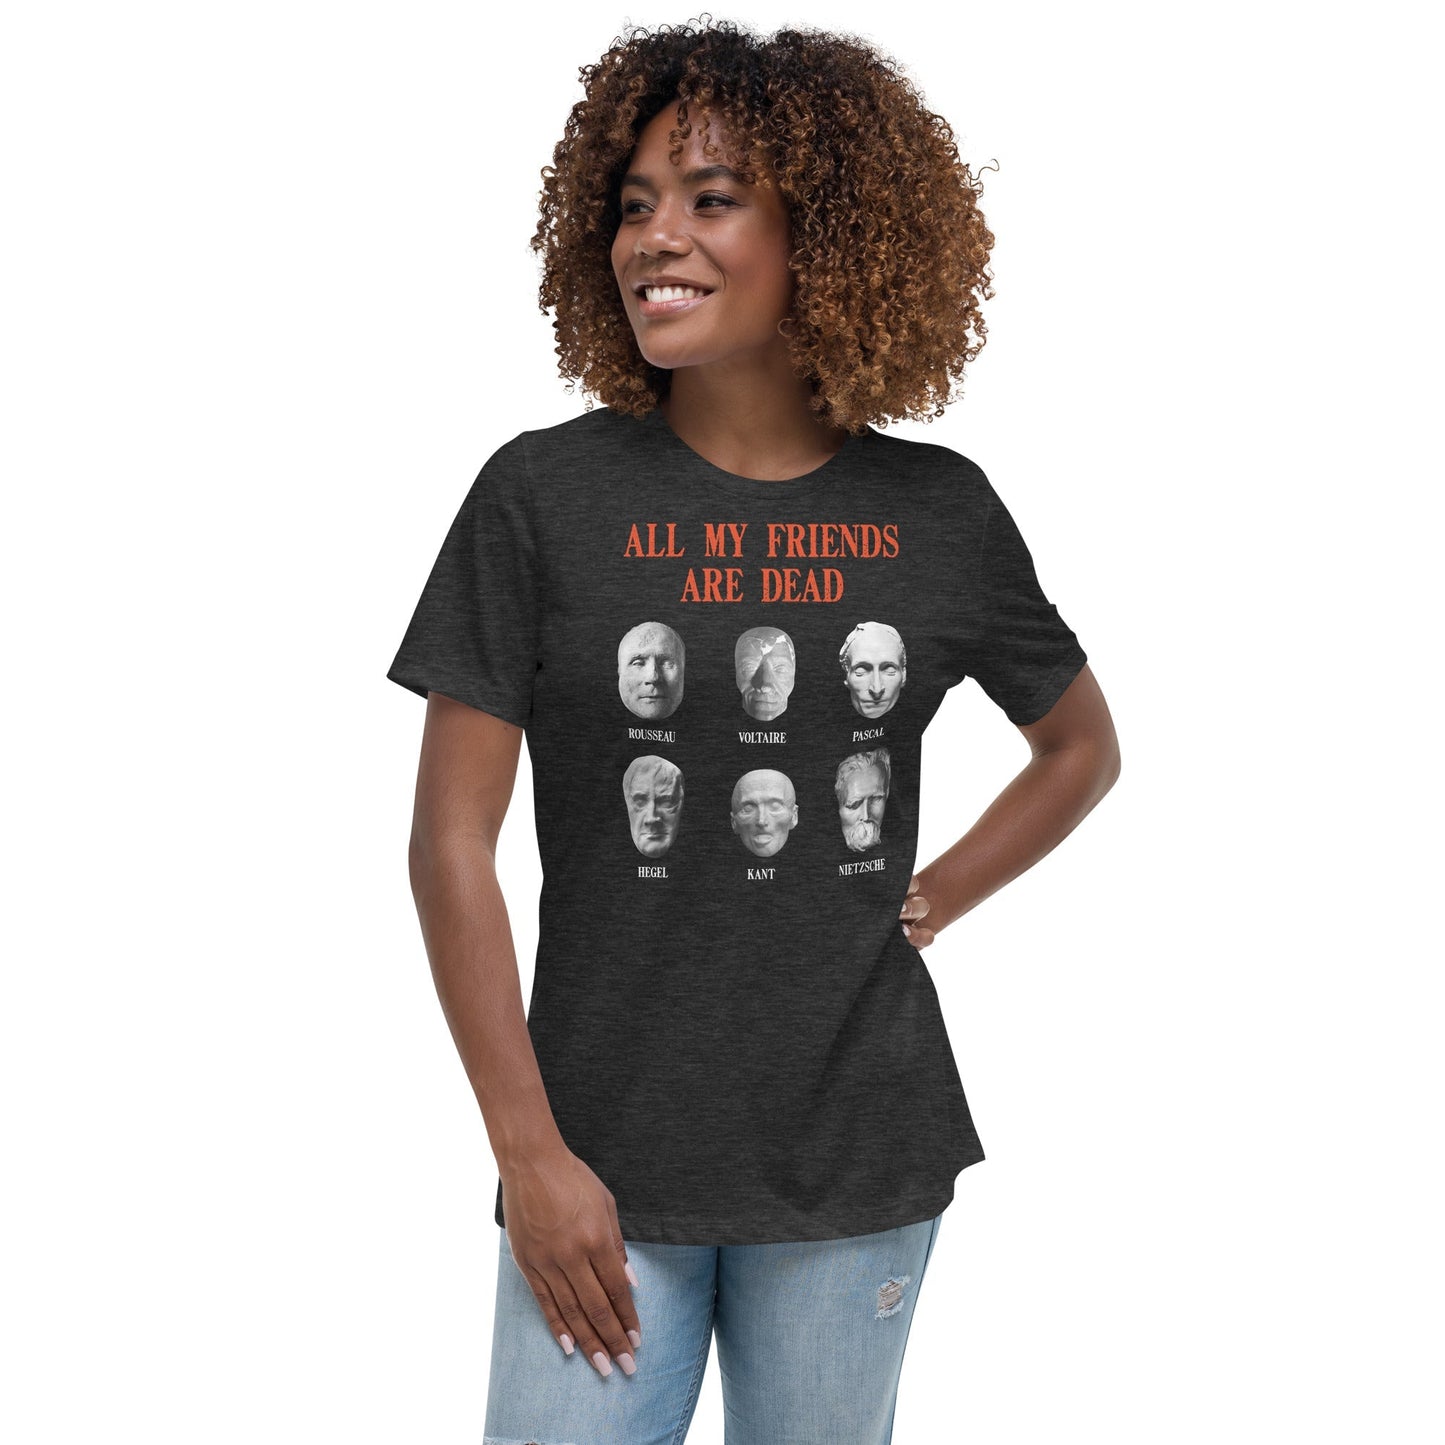 All my friends are dead - Women's T-Shirt